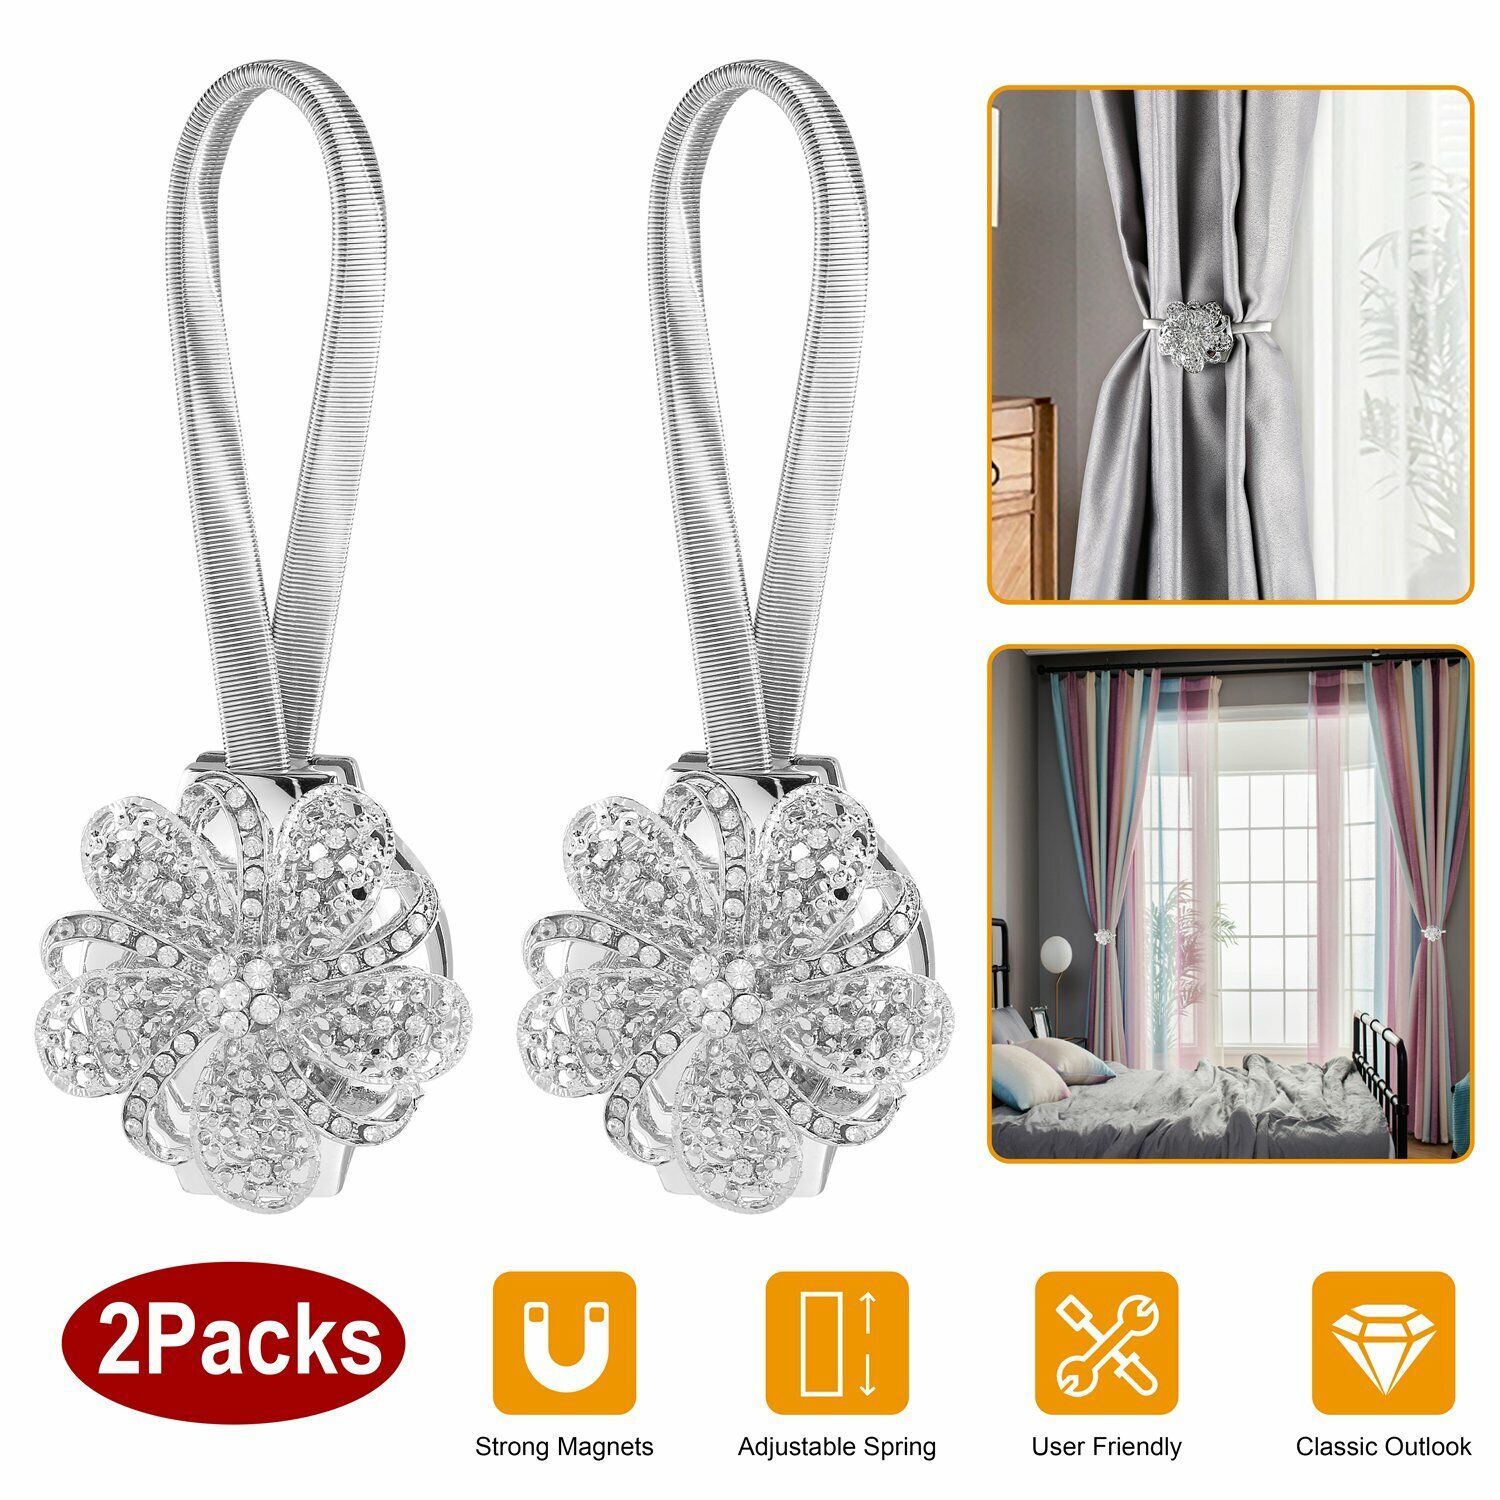 2 Packs Magnetic Curtain Tiebacks Extendable Floral Drape Holder Hangings Clip iMounTEK Does Not Apply